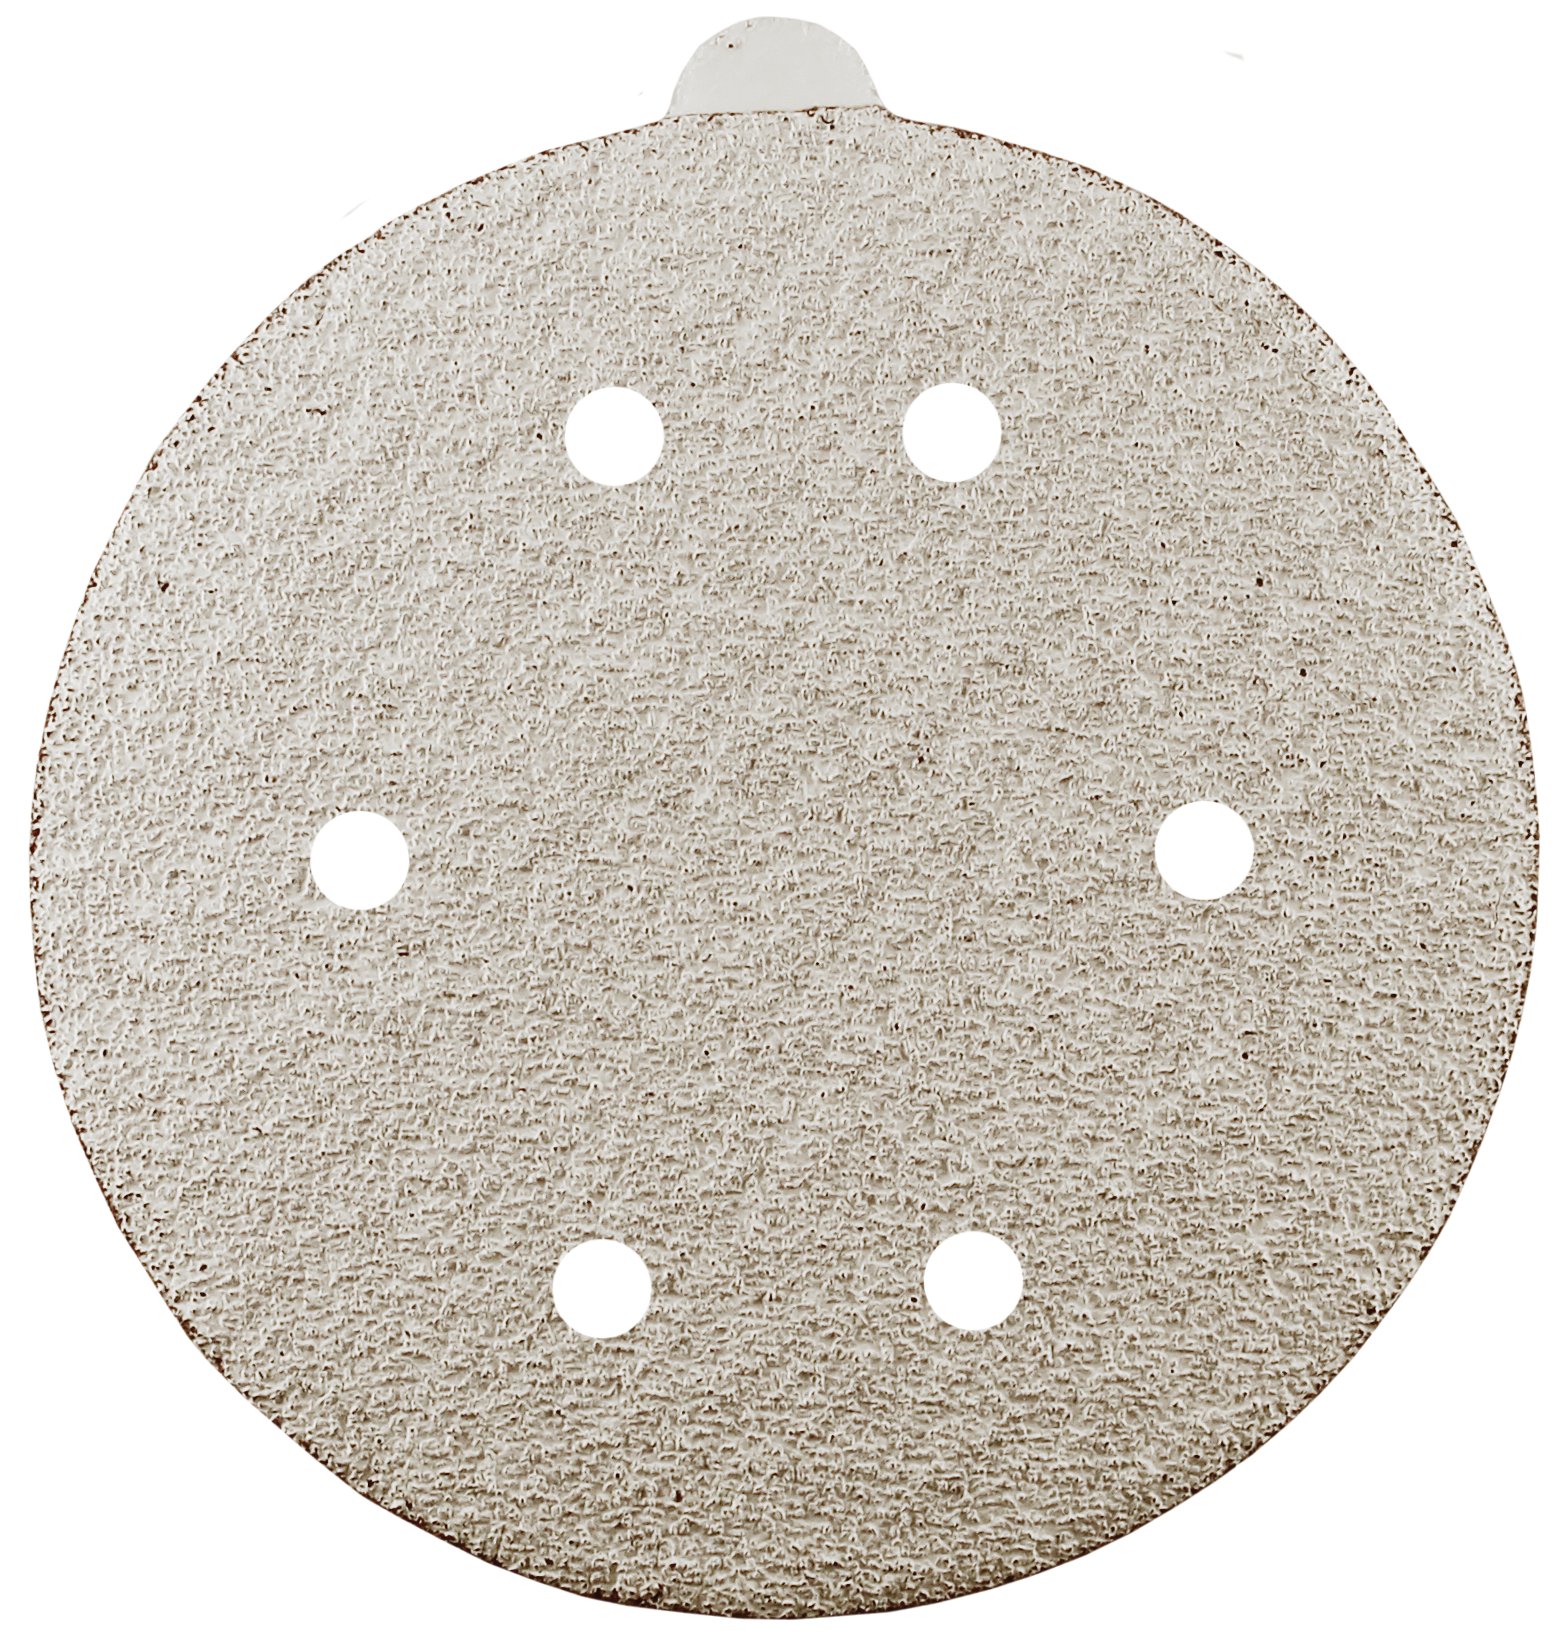 Abracs PSA Sanding Disc 150mm x 40g - 6 Holes